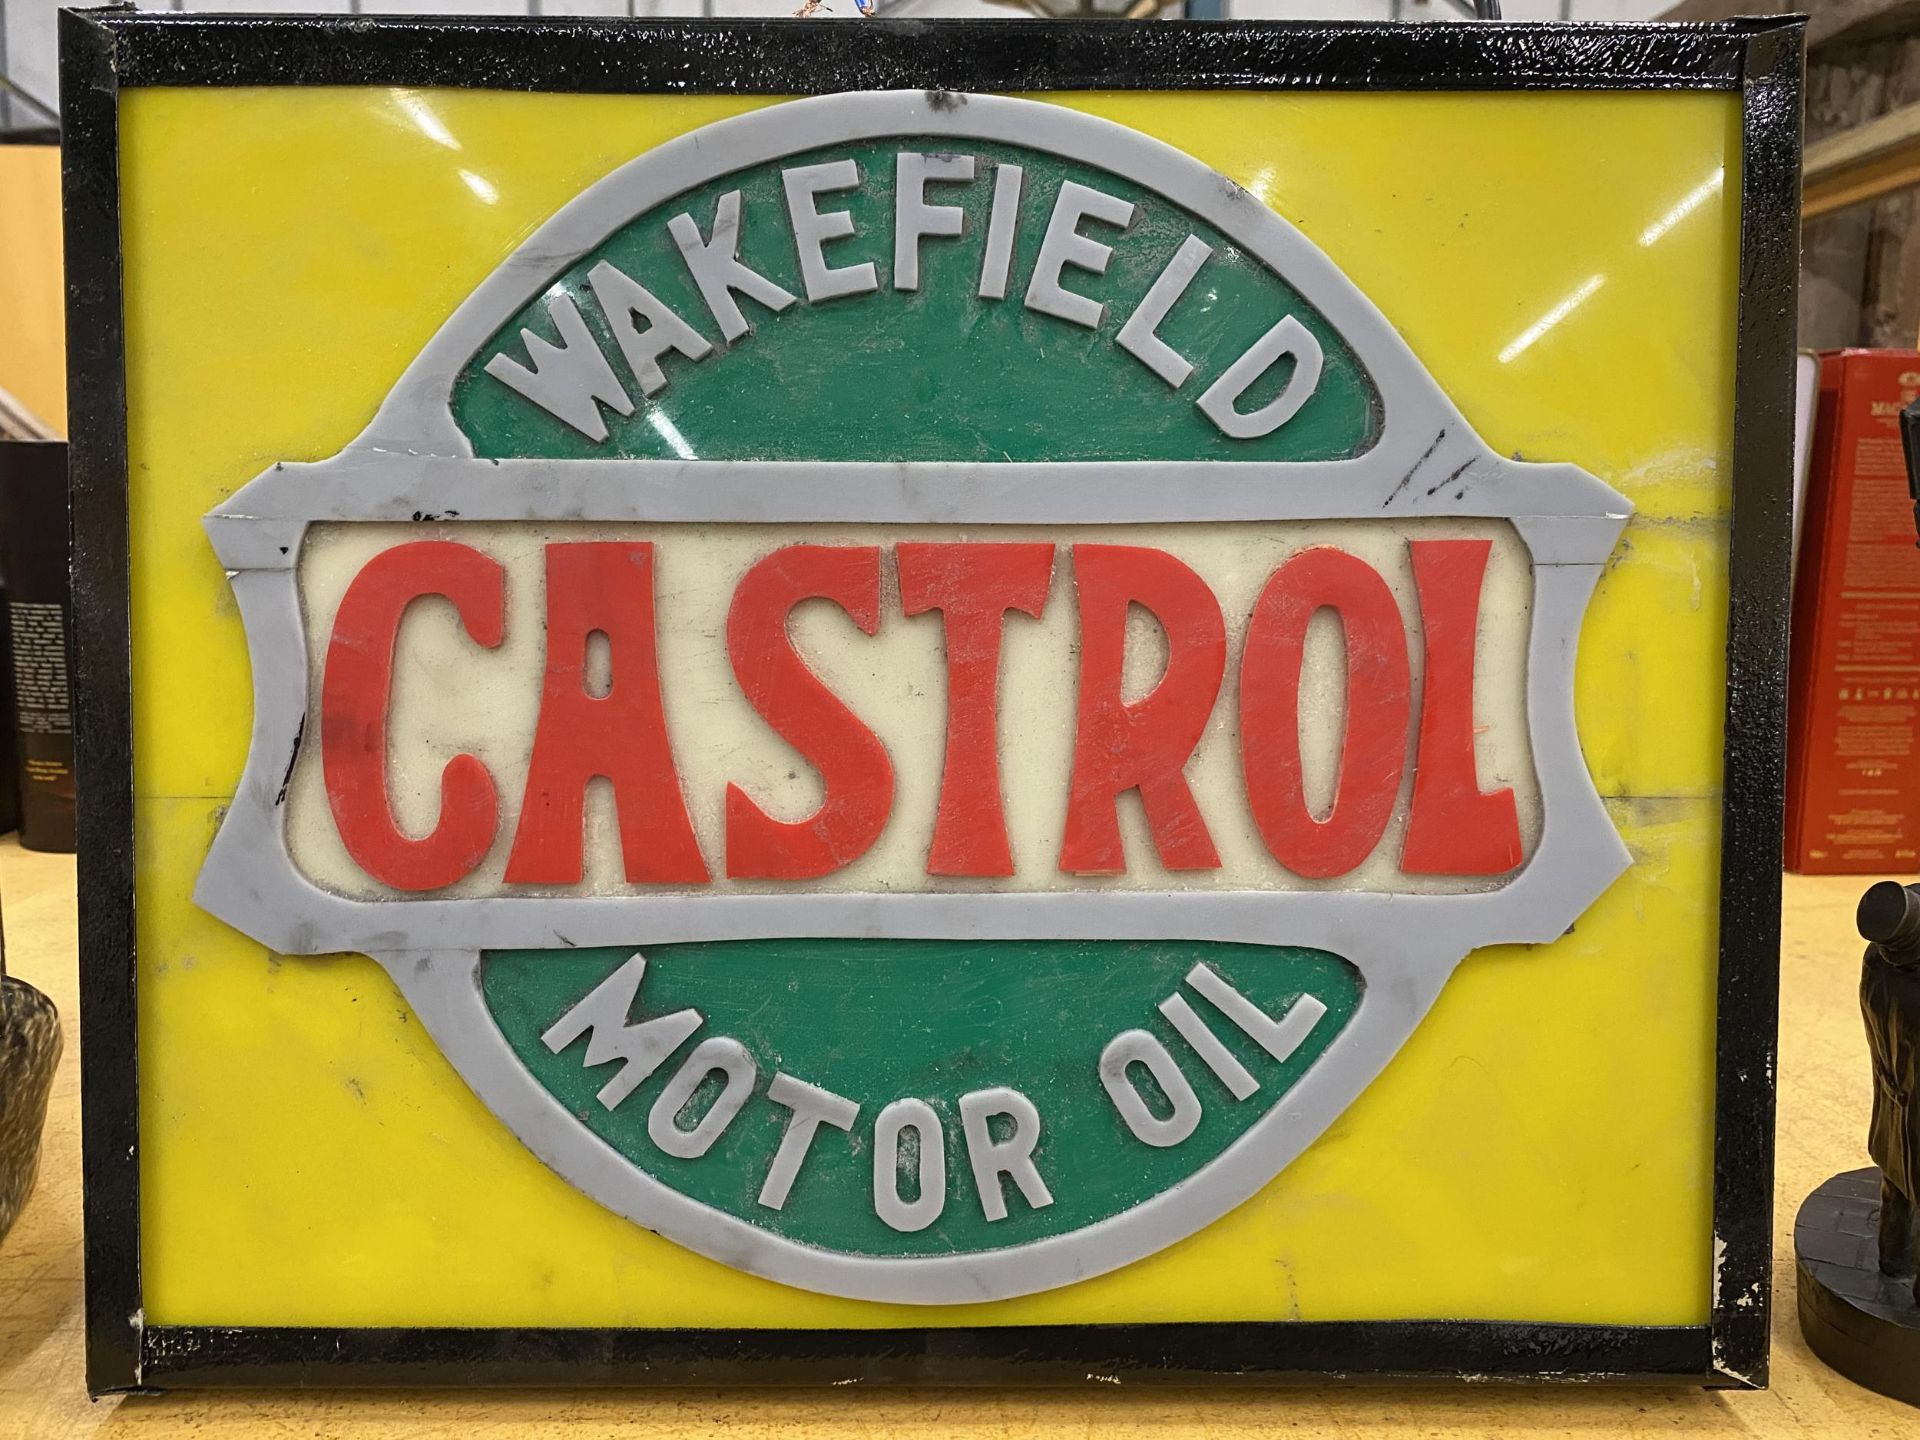 A WAKEFIELD CASTROL MOTOR OIL ILLUMINATED BOX SIGN, 33 X 42 X 10CM